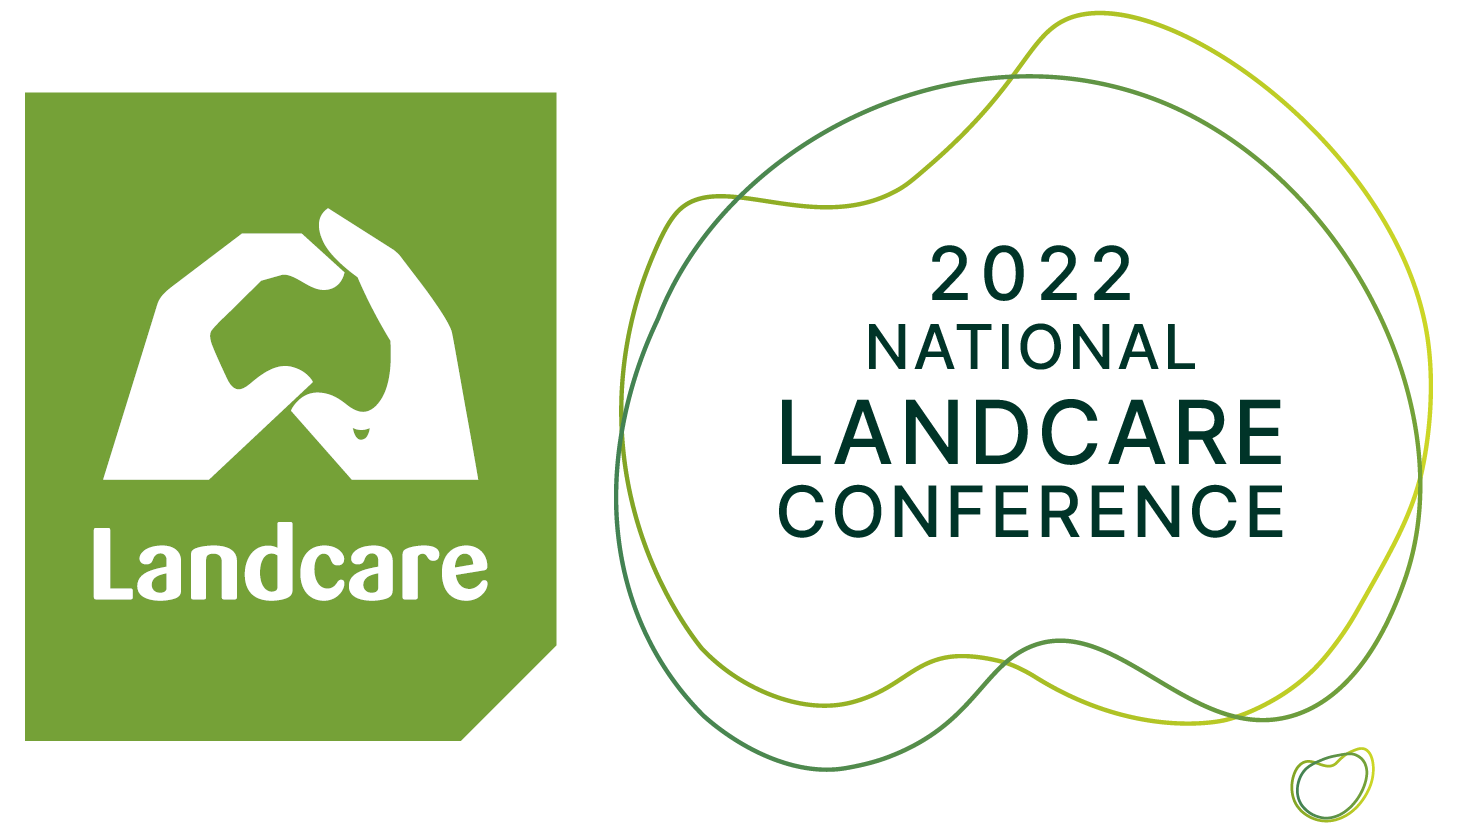 National Landcare Conference